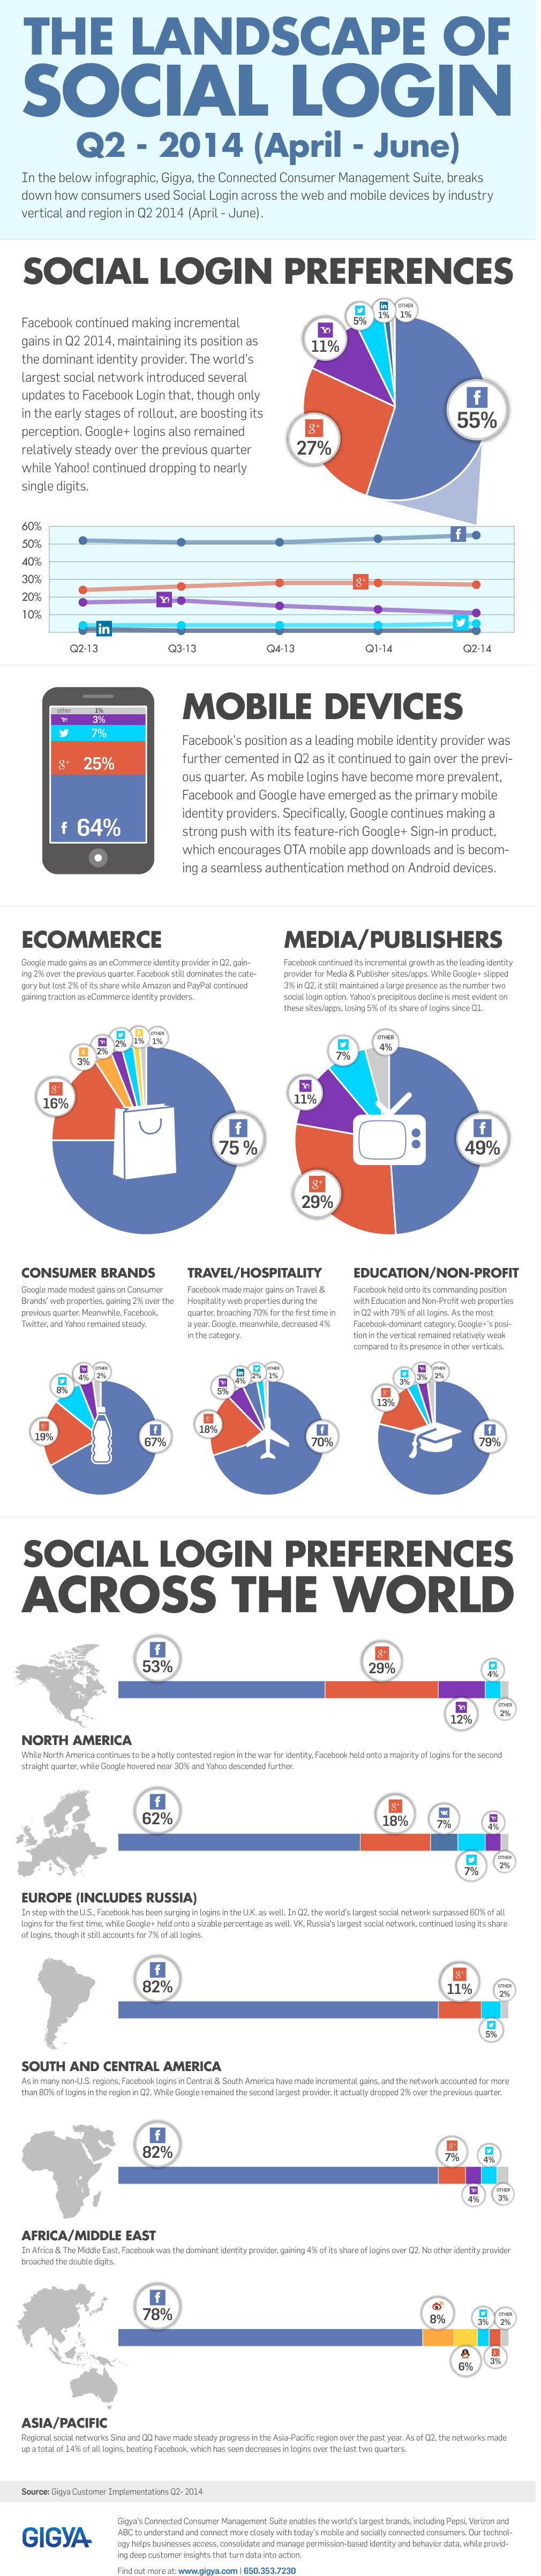 Social Login Data_Q2 2014_Gigya